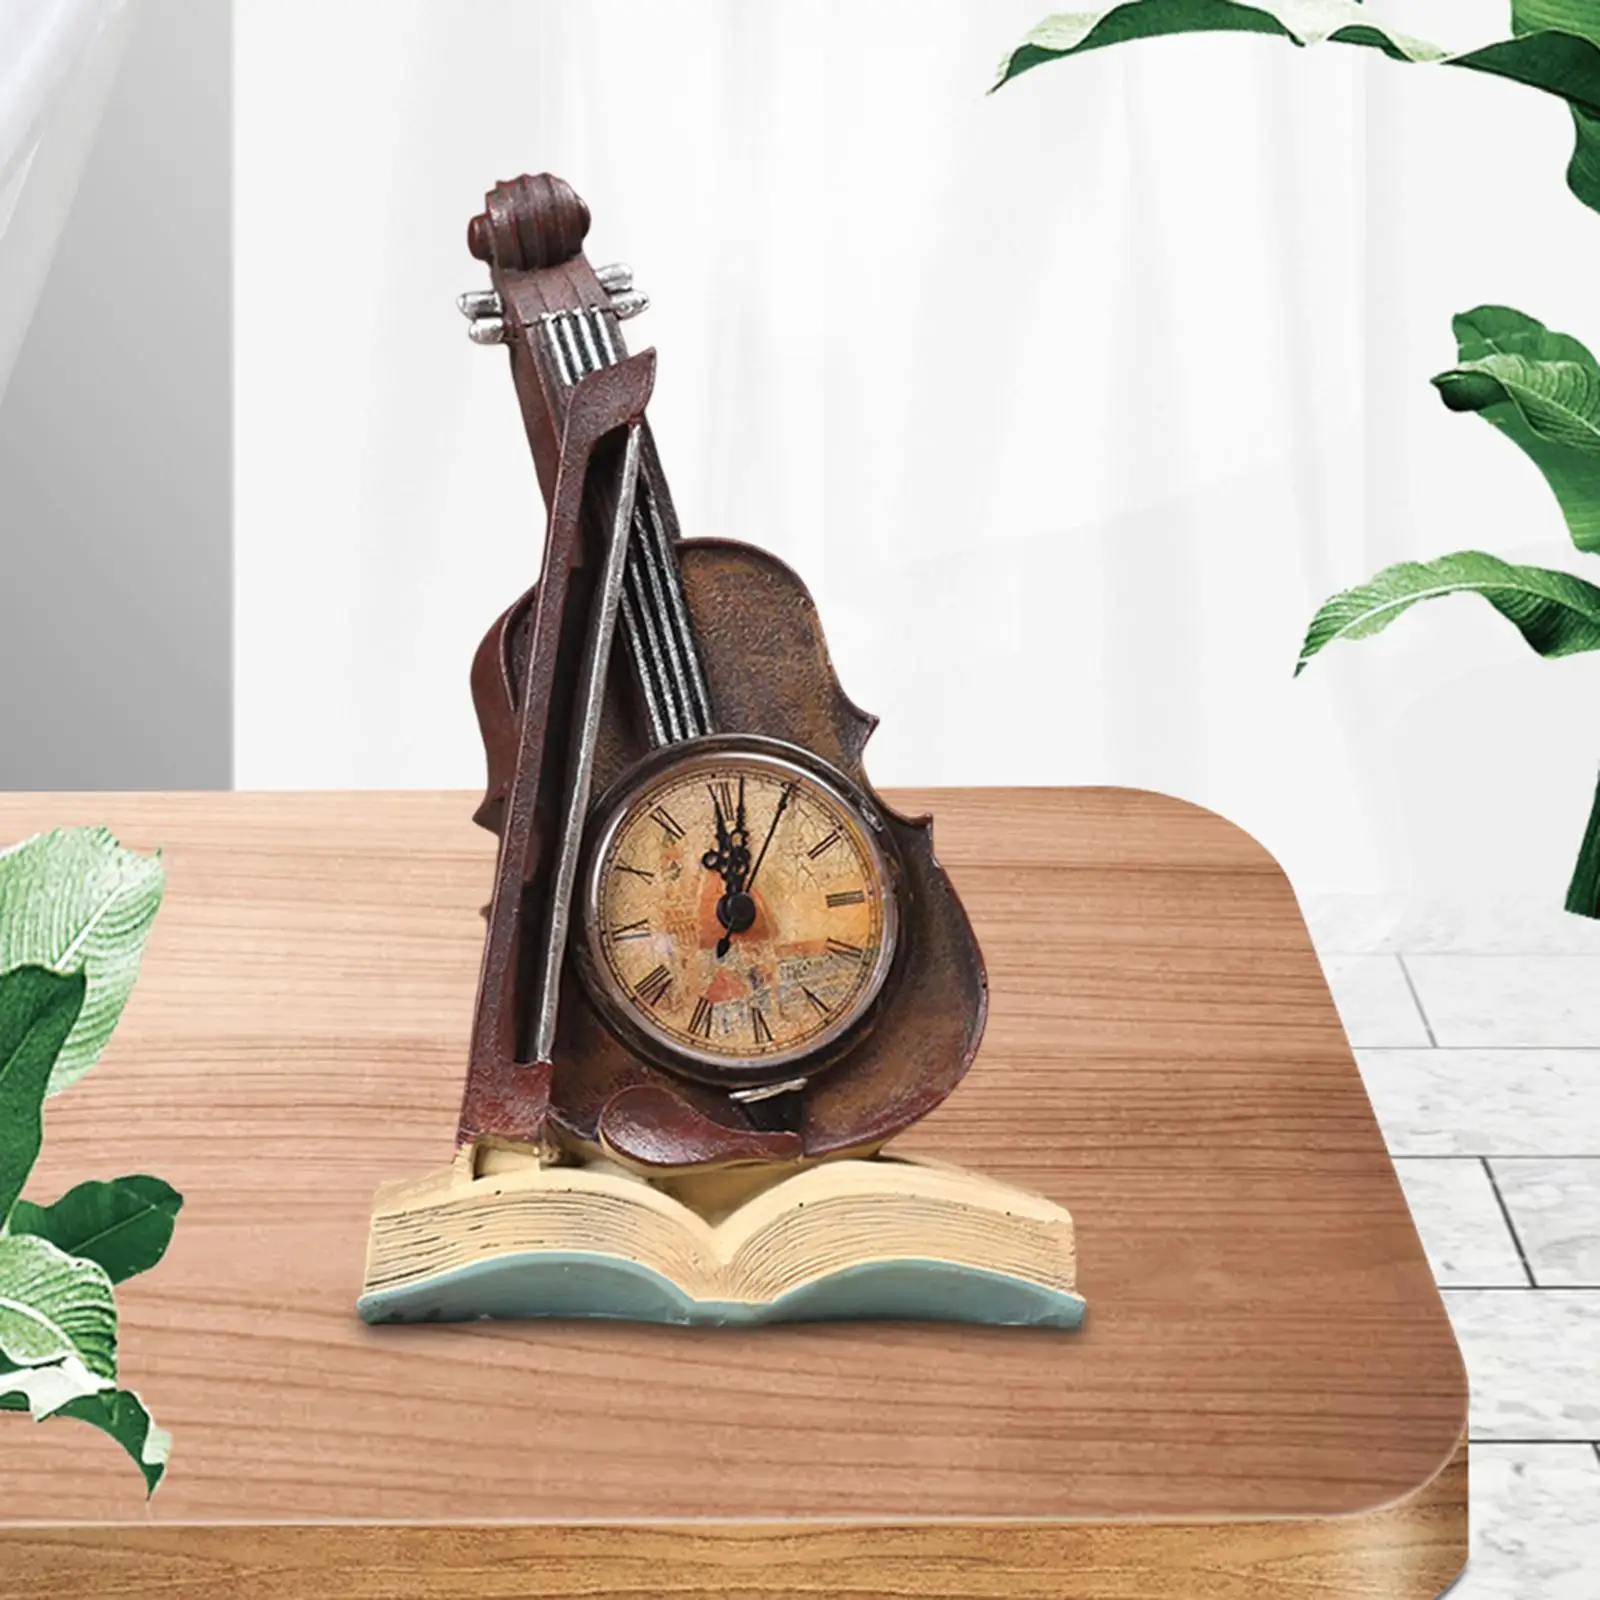 Resin Violin Statue Home Decor Creative Art Crafts Musical Sculpture for Desk Home Bedroom Living Room Housewarming Gifts